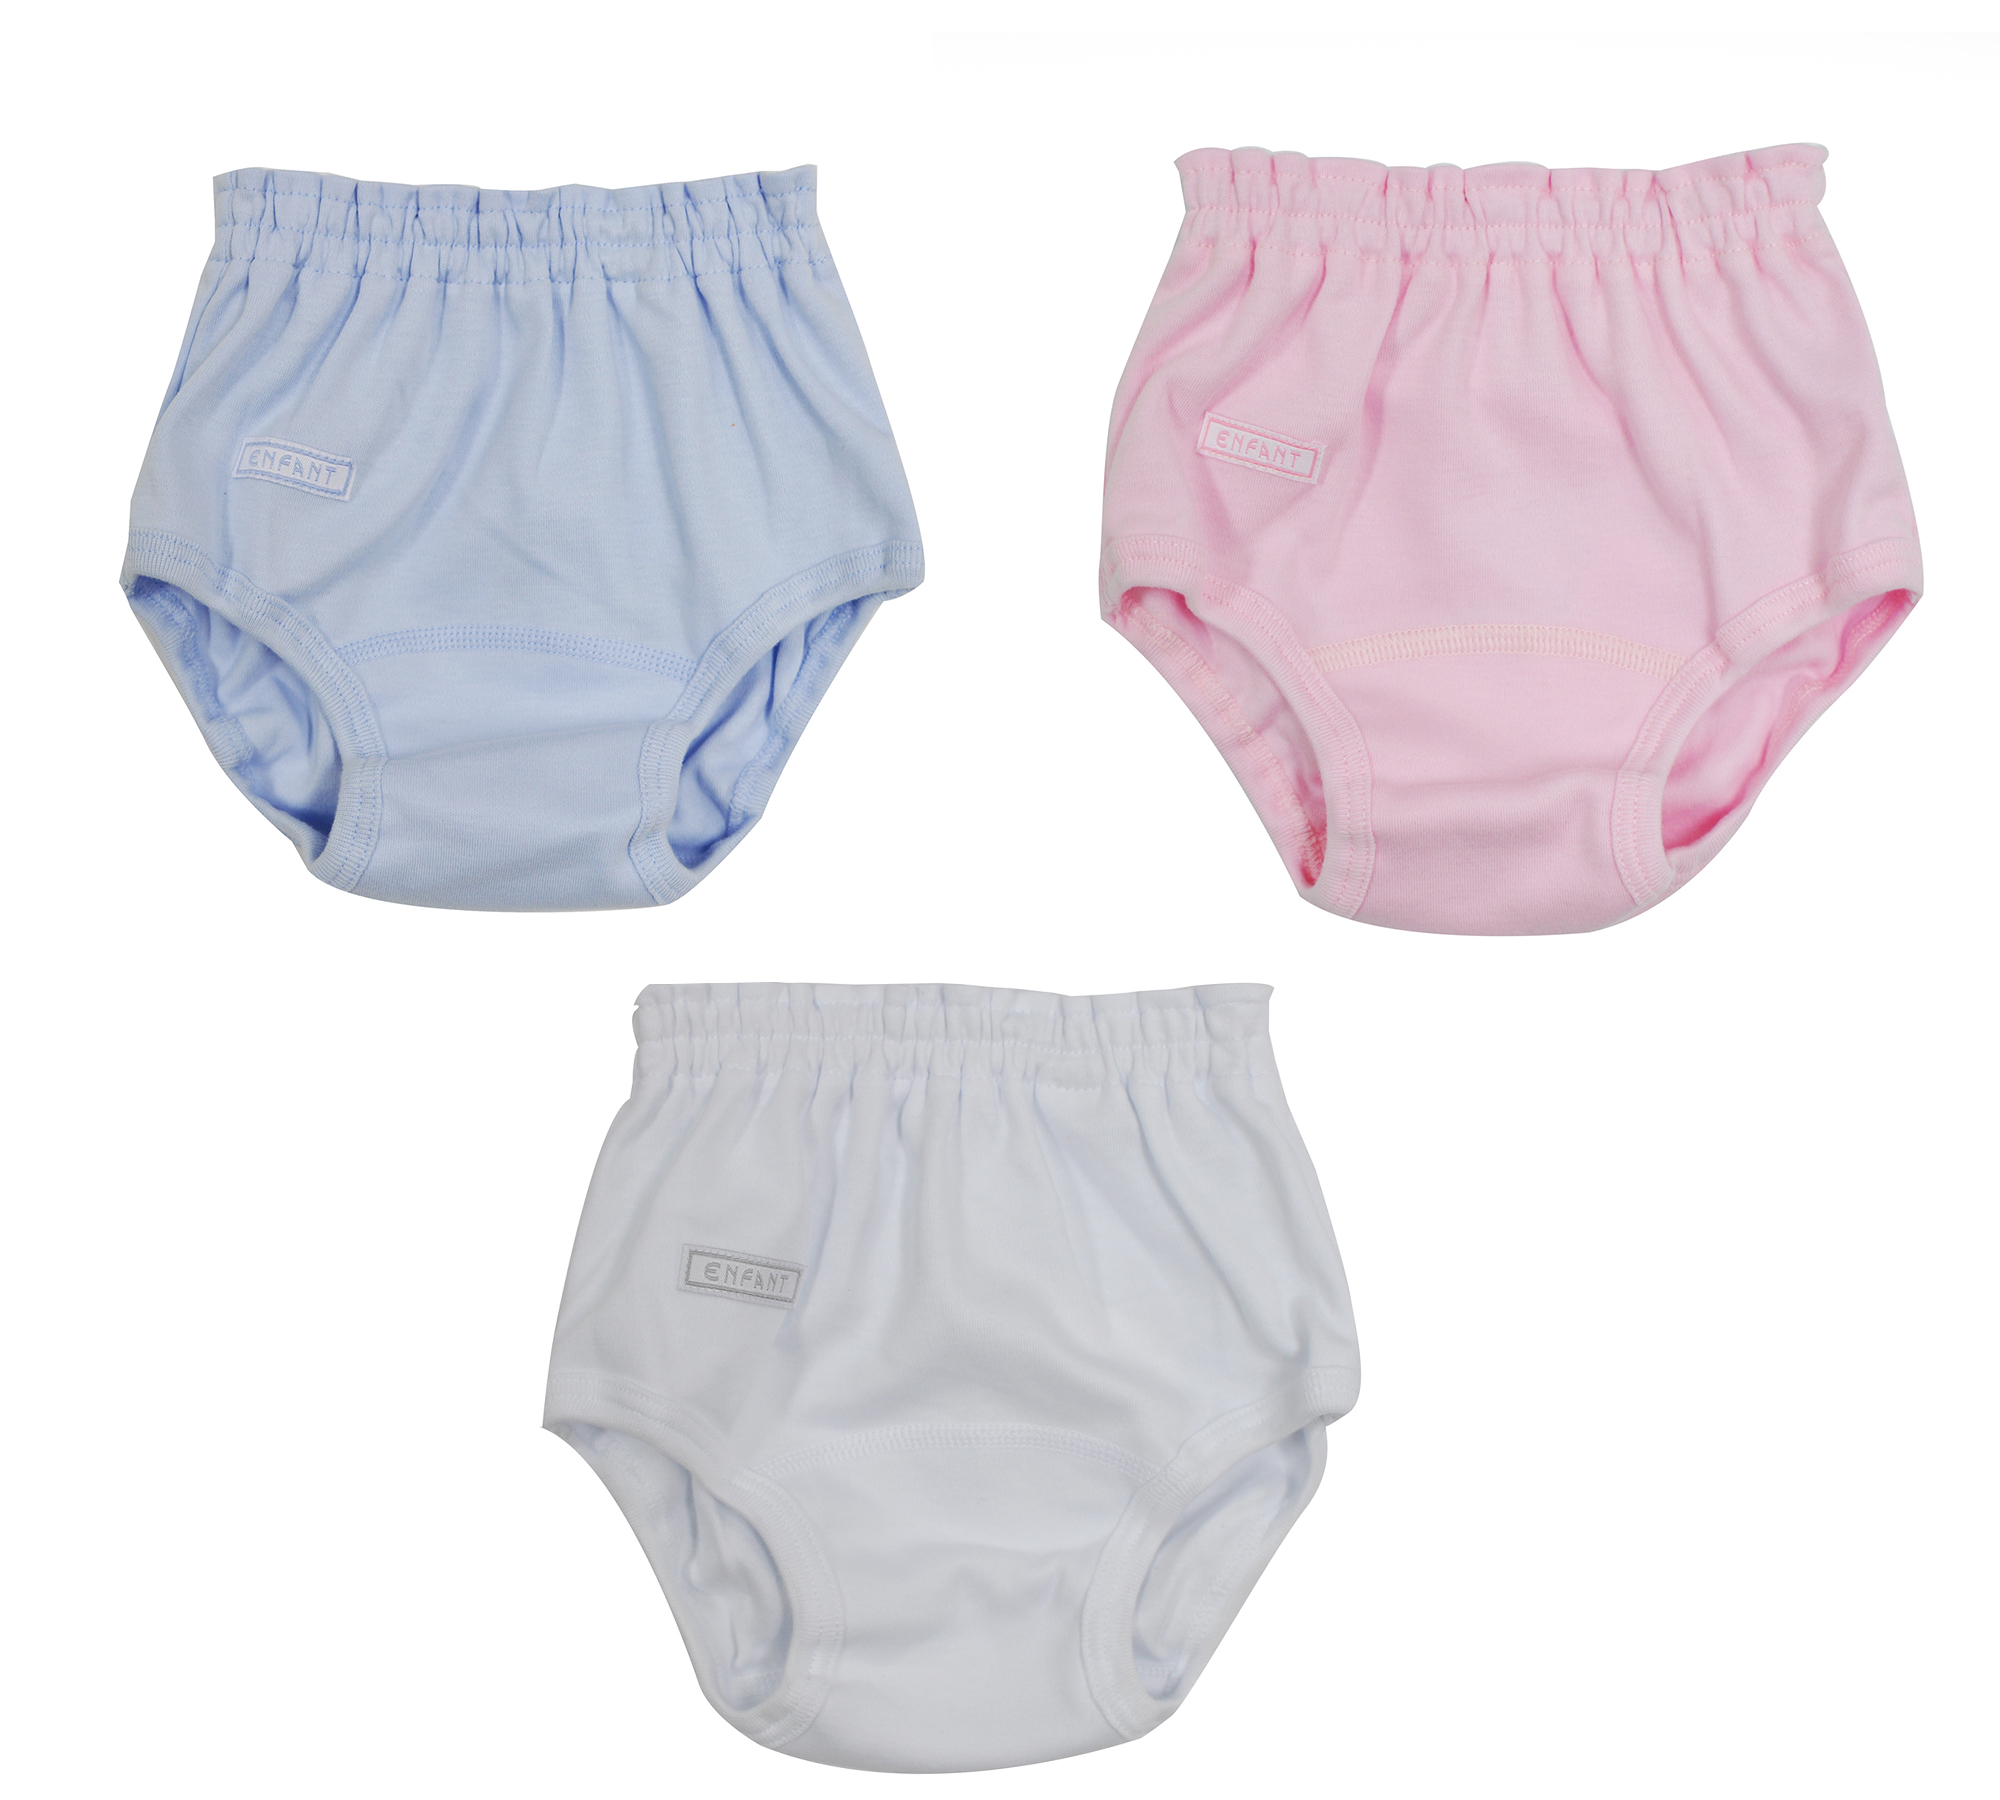 Enfant Unisex boy girl Baby White Panty Brief (White , pink , blue